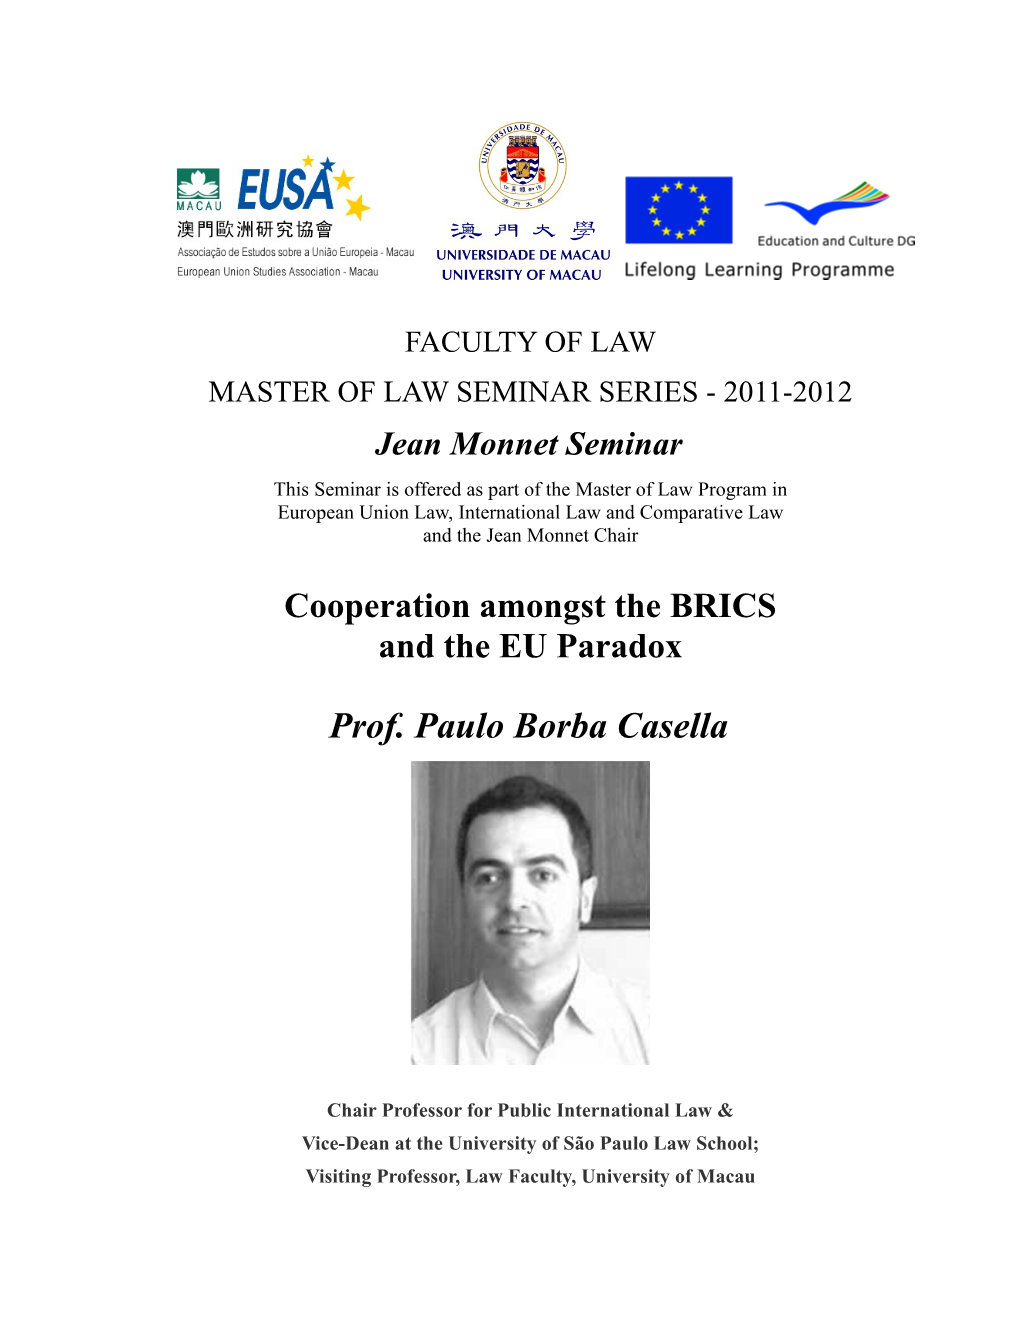 Master of Law Seminar Series - 2011-2012